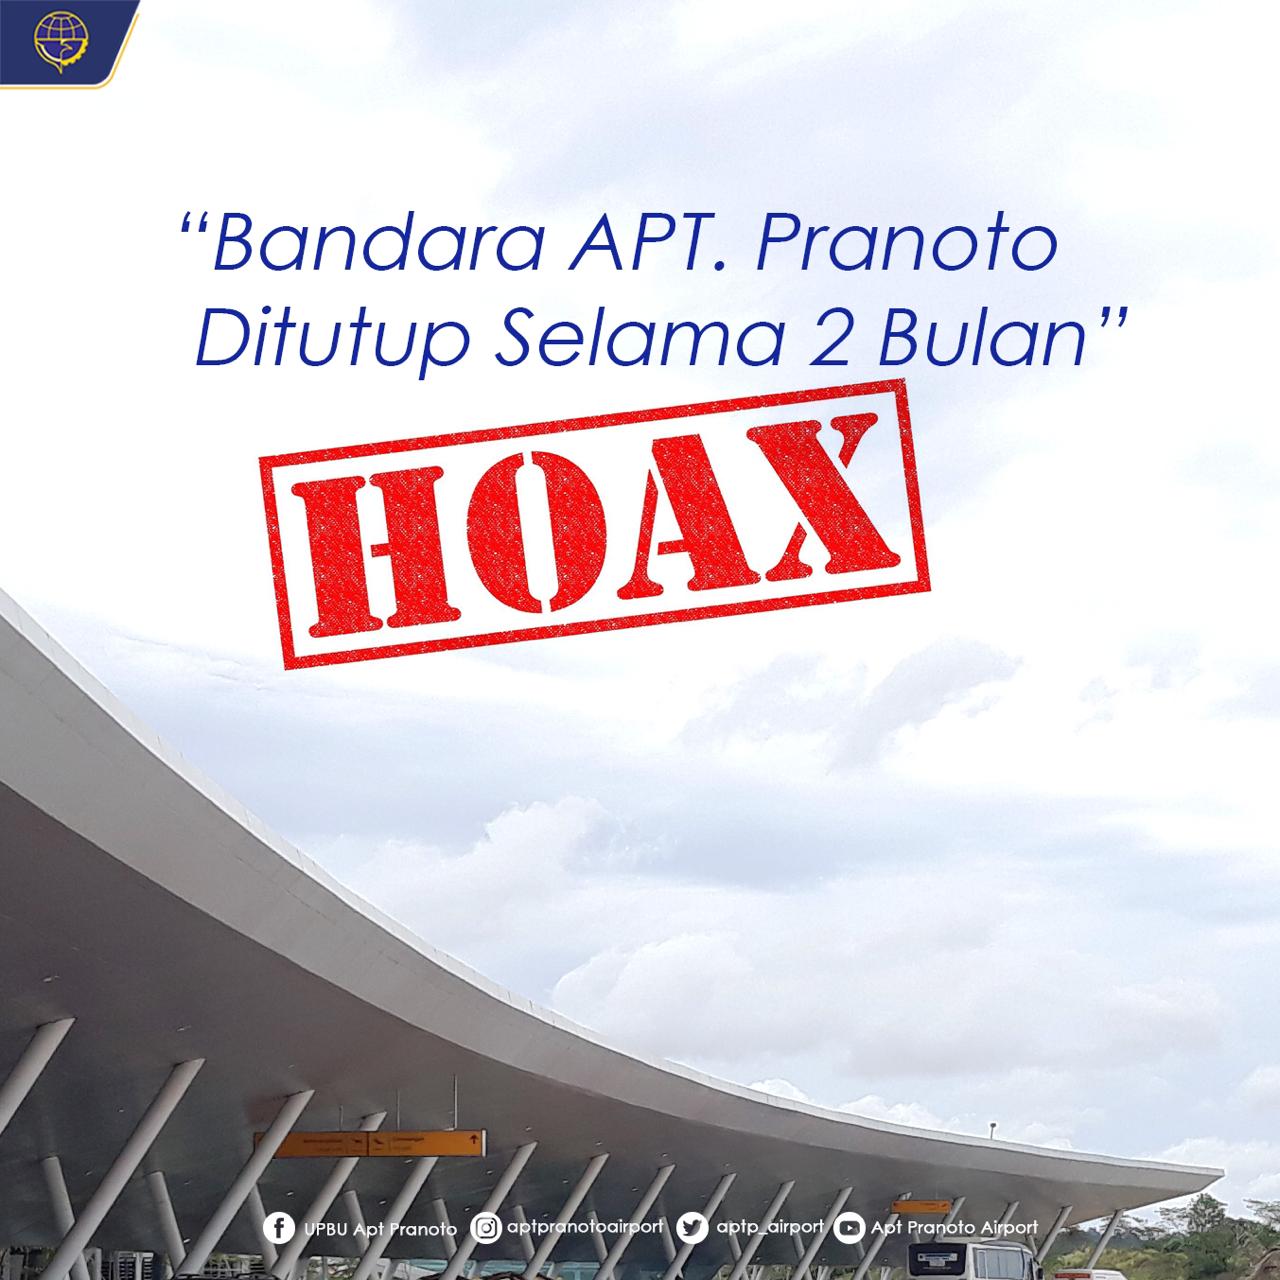 Disebut Tutup Dua Bulan, Kepala Bandara APT Pranoto : Berita Palsu…